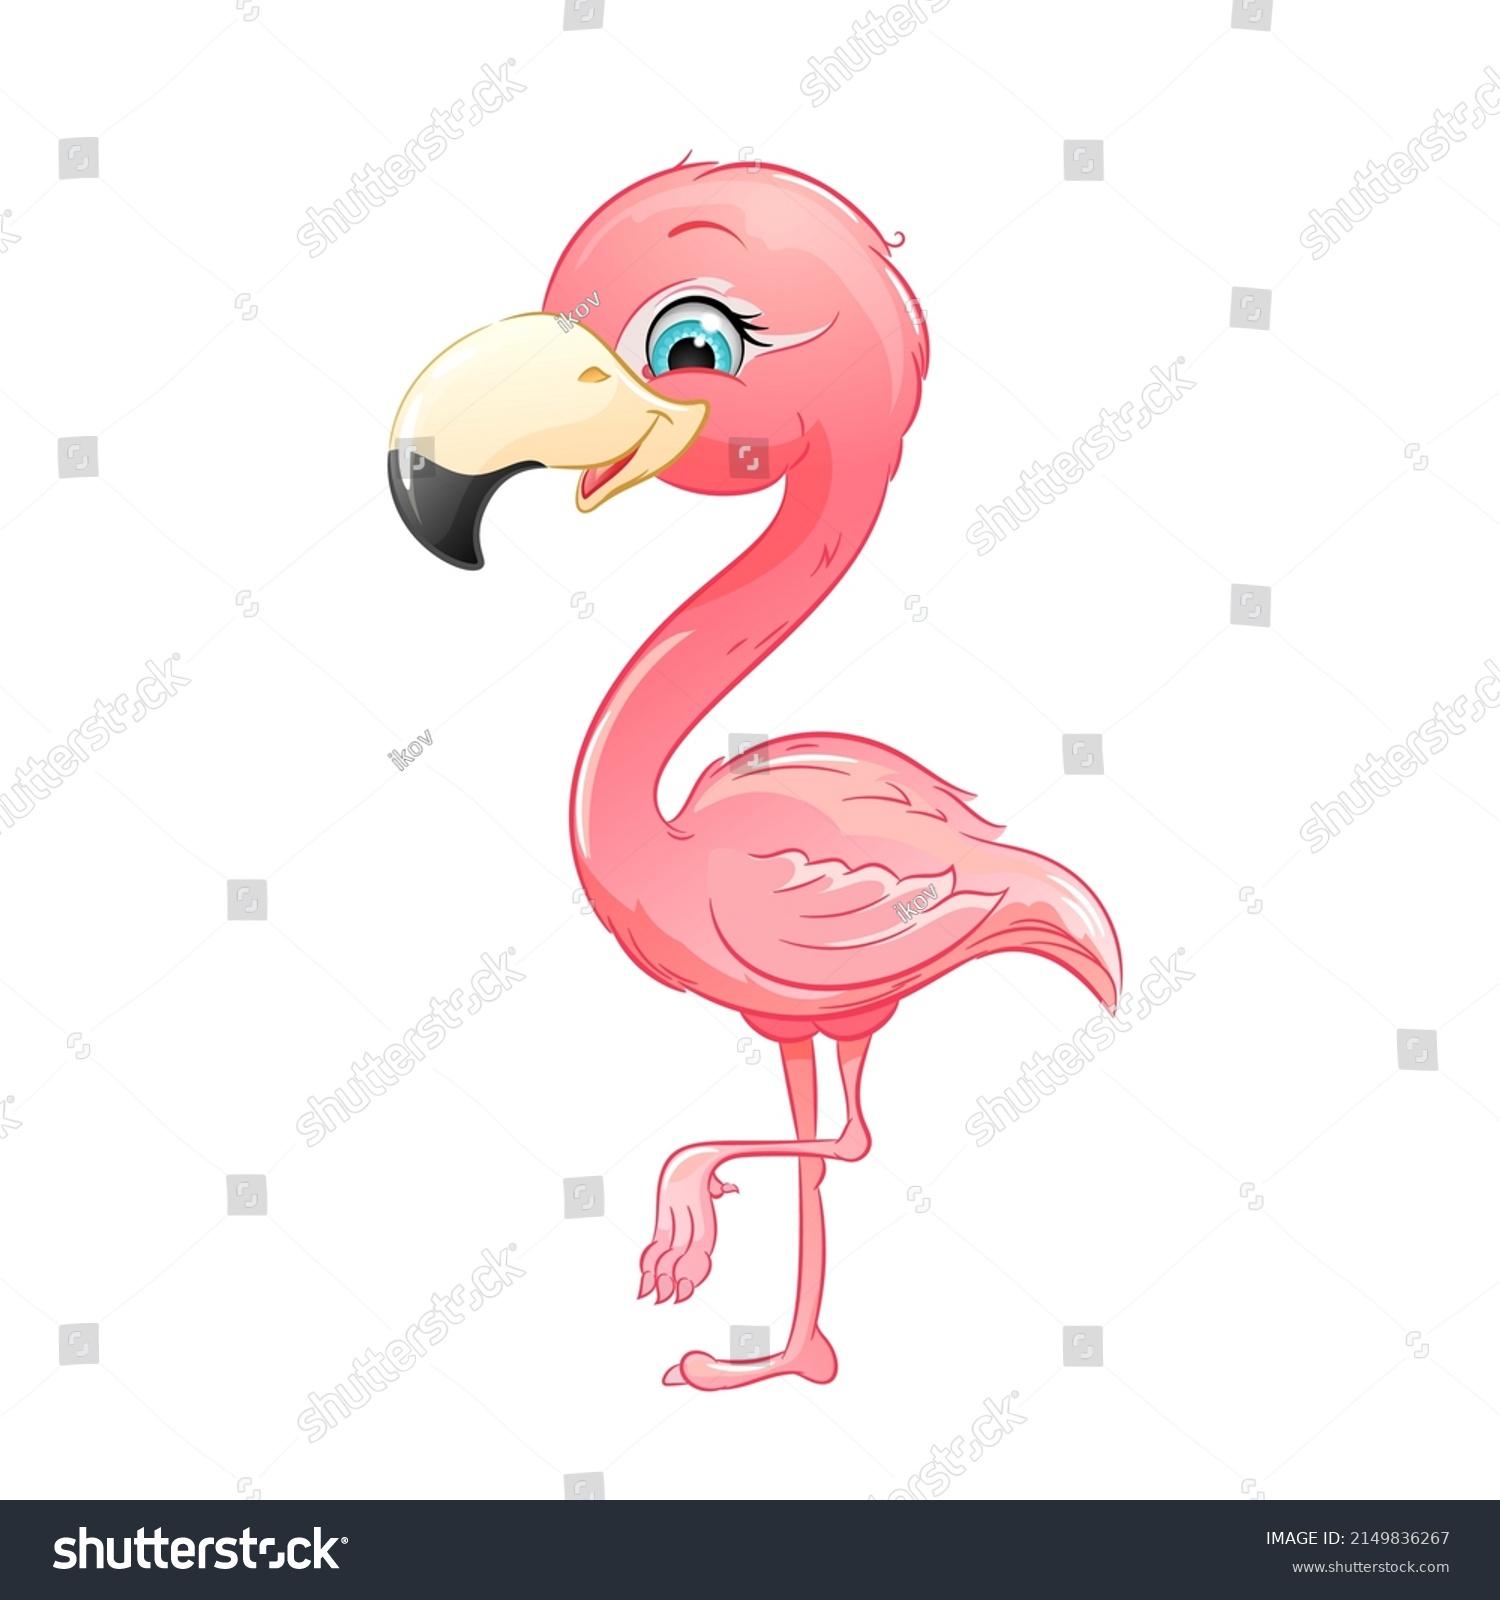 Cute Cartoon Pink Flamingo Vector Illustration Stock Vector Royalty Free 2149836267 Shutterstock 4212